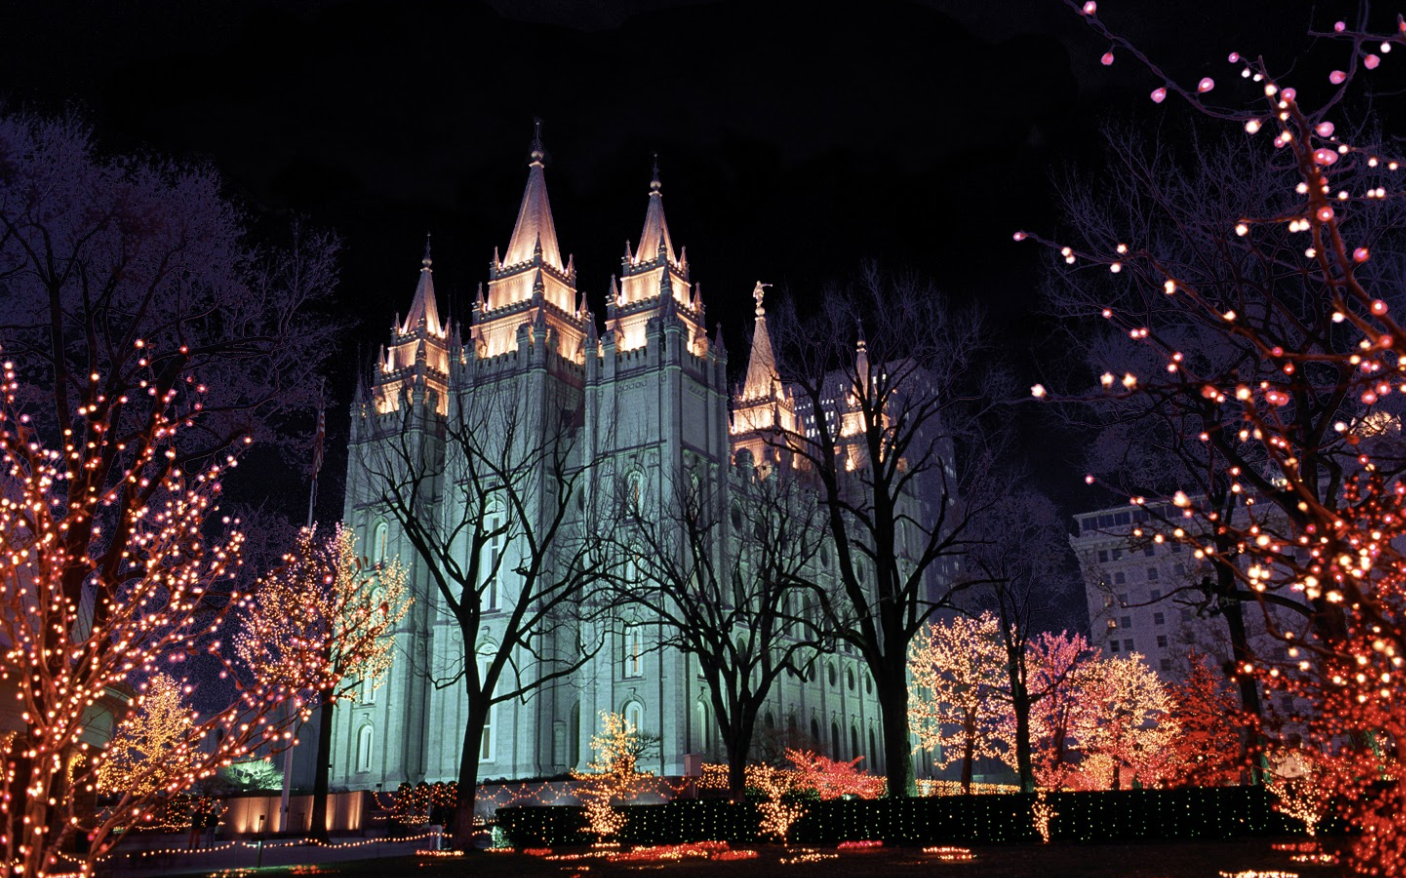 Salt Lake City Temple Square Christmas Lights LDS Mormon36.png